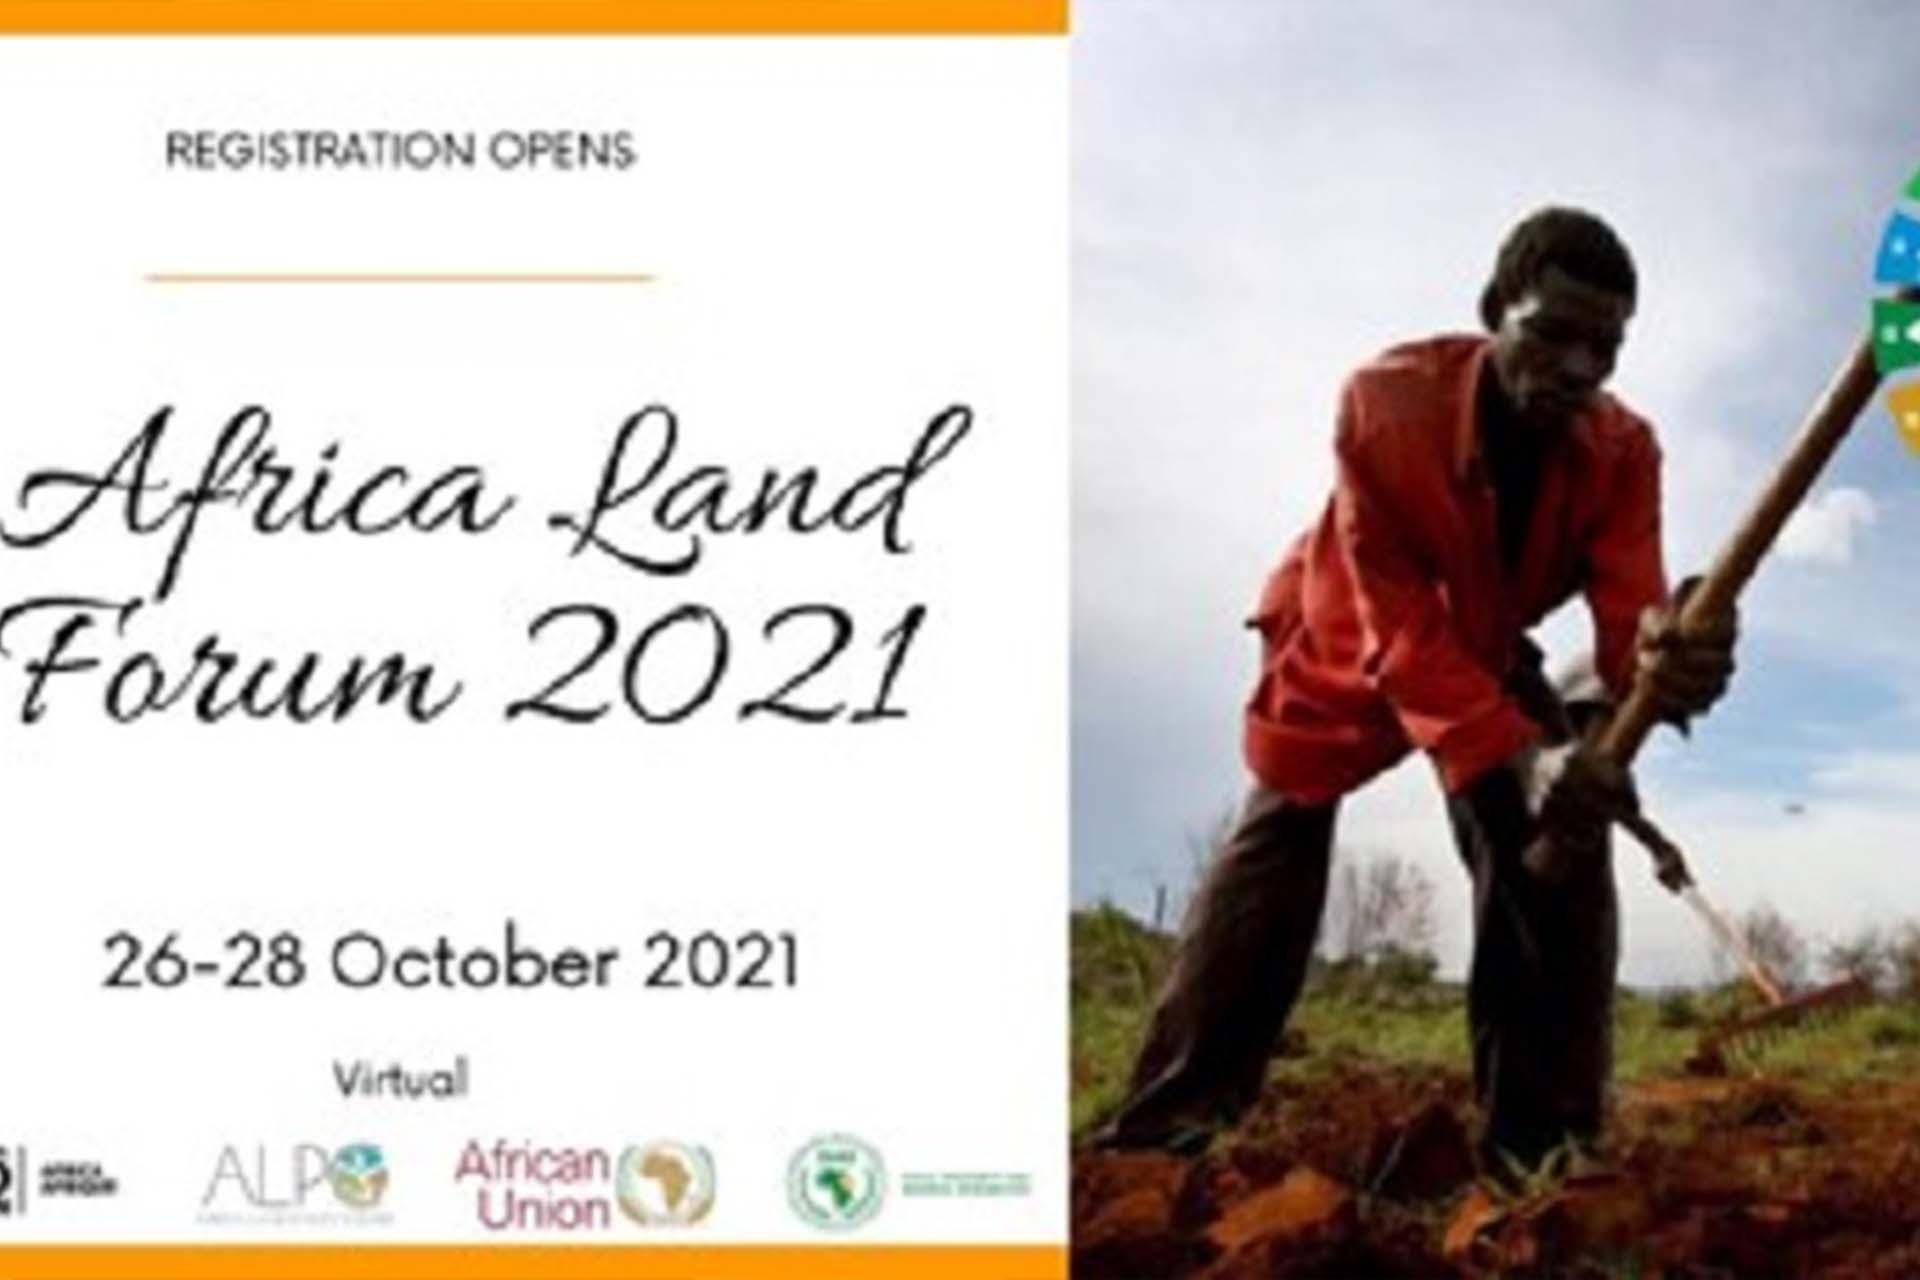 Africa Land Forum 2021